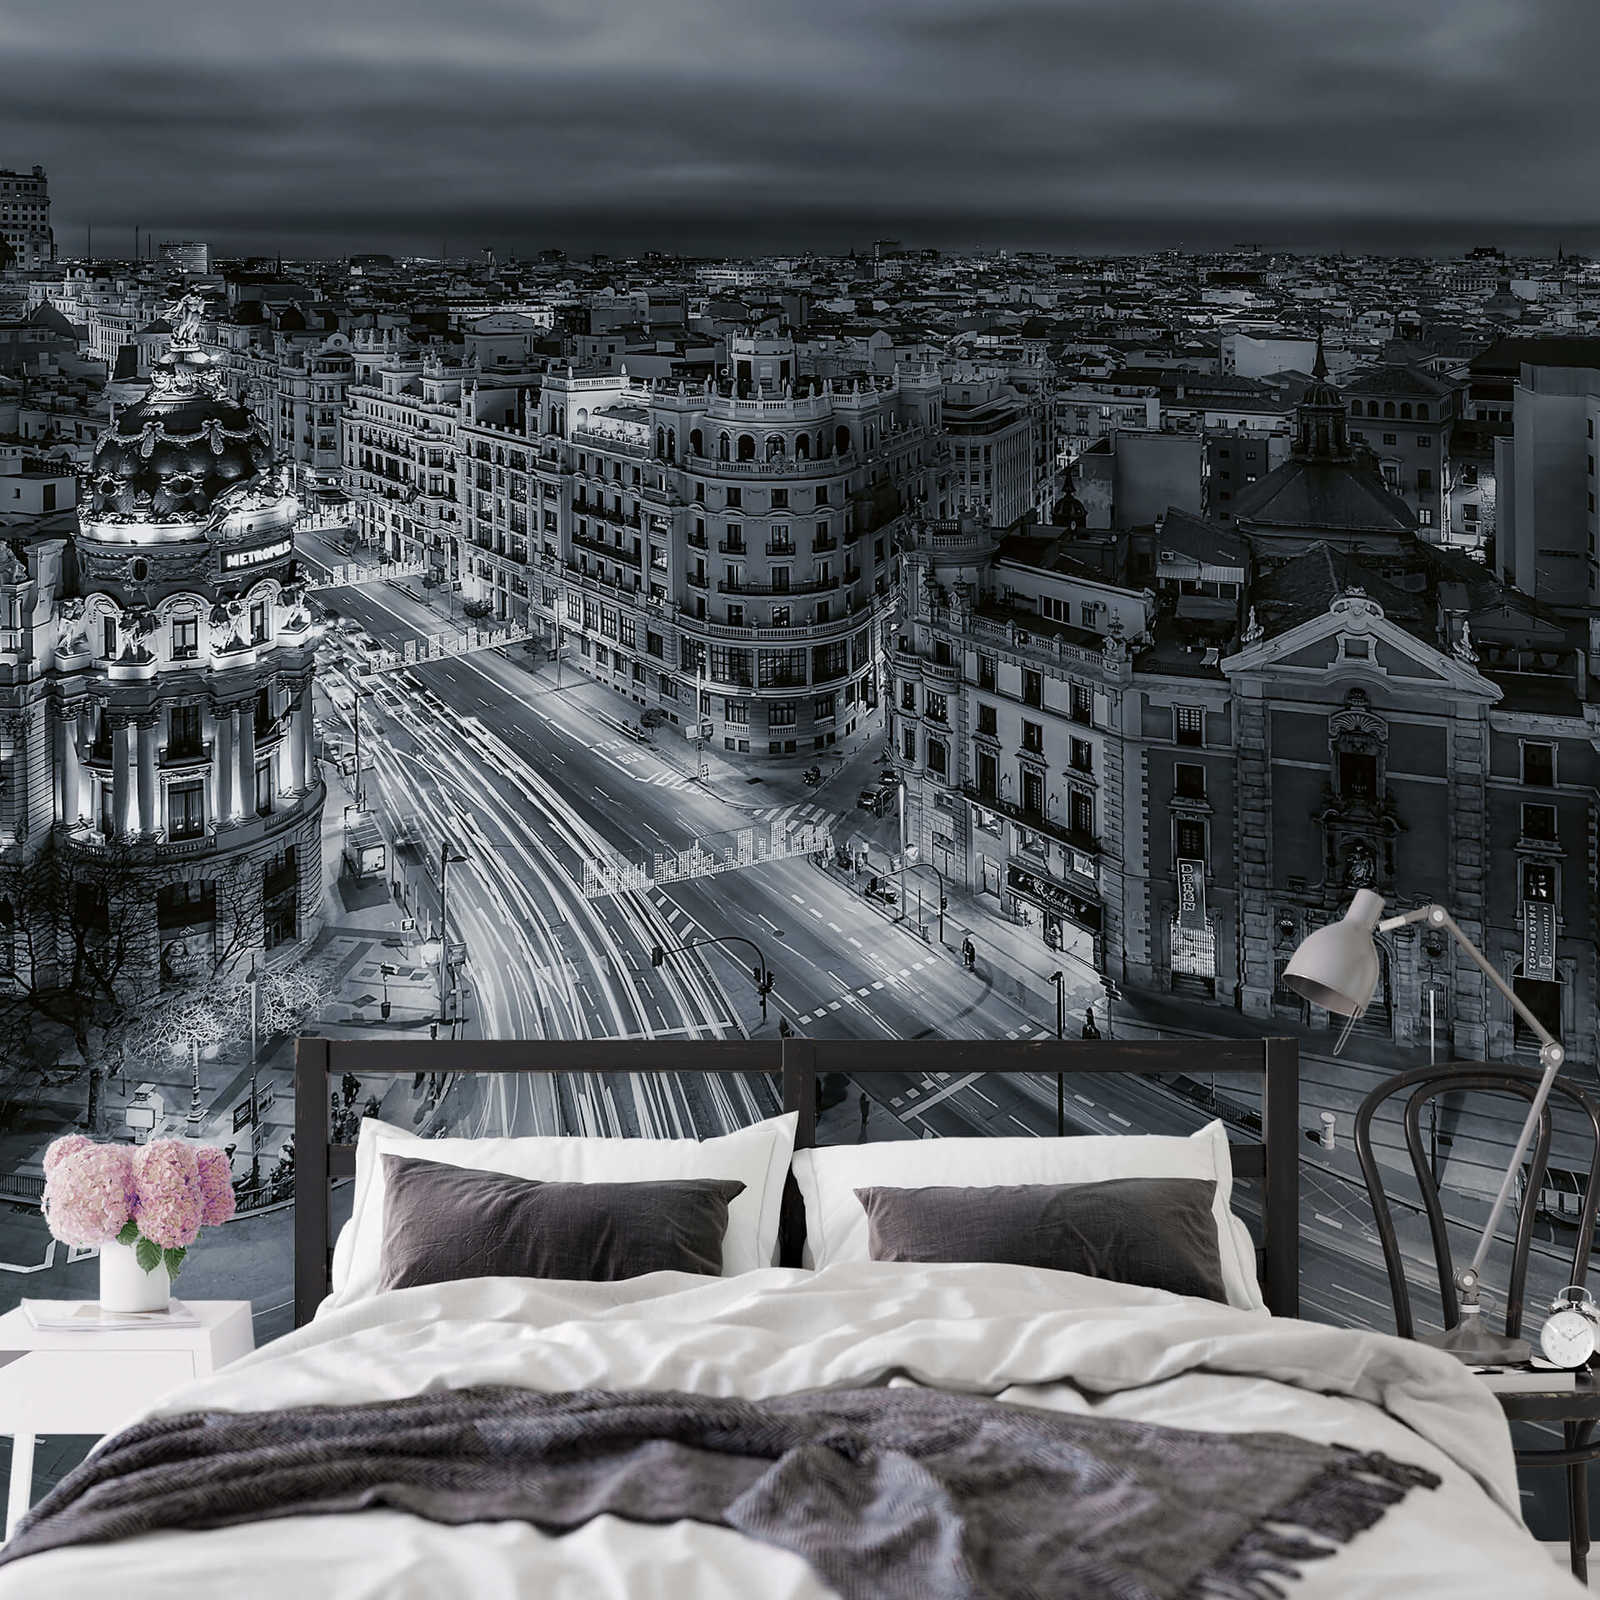             Photo wallpaper Madrid city - grey, white, black
        